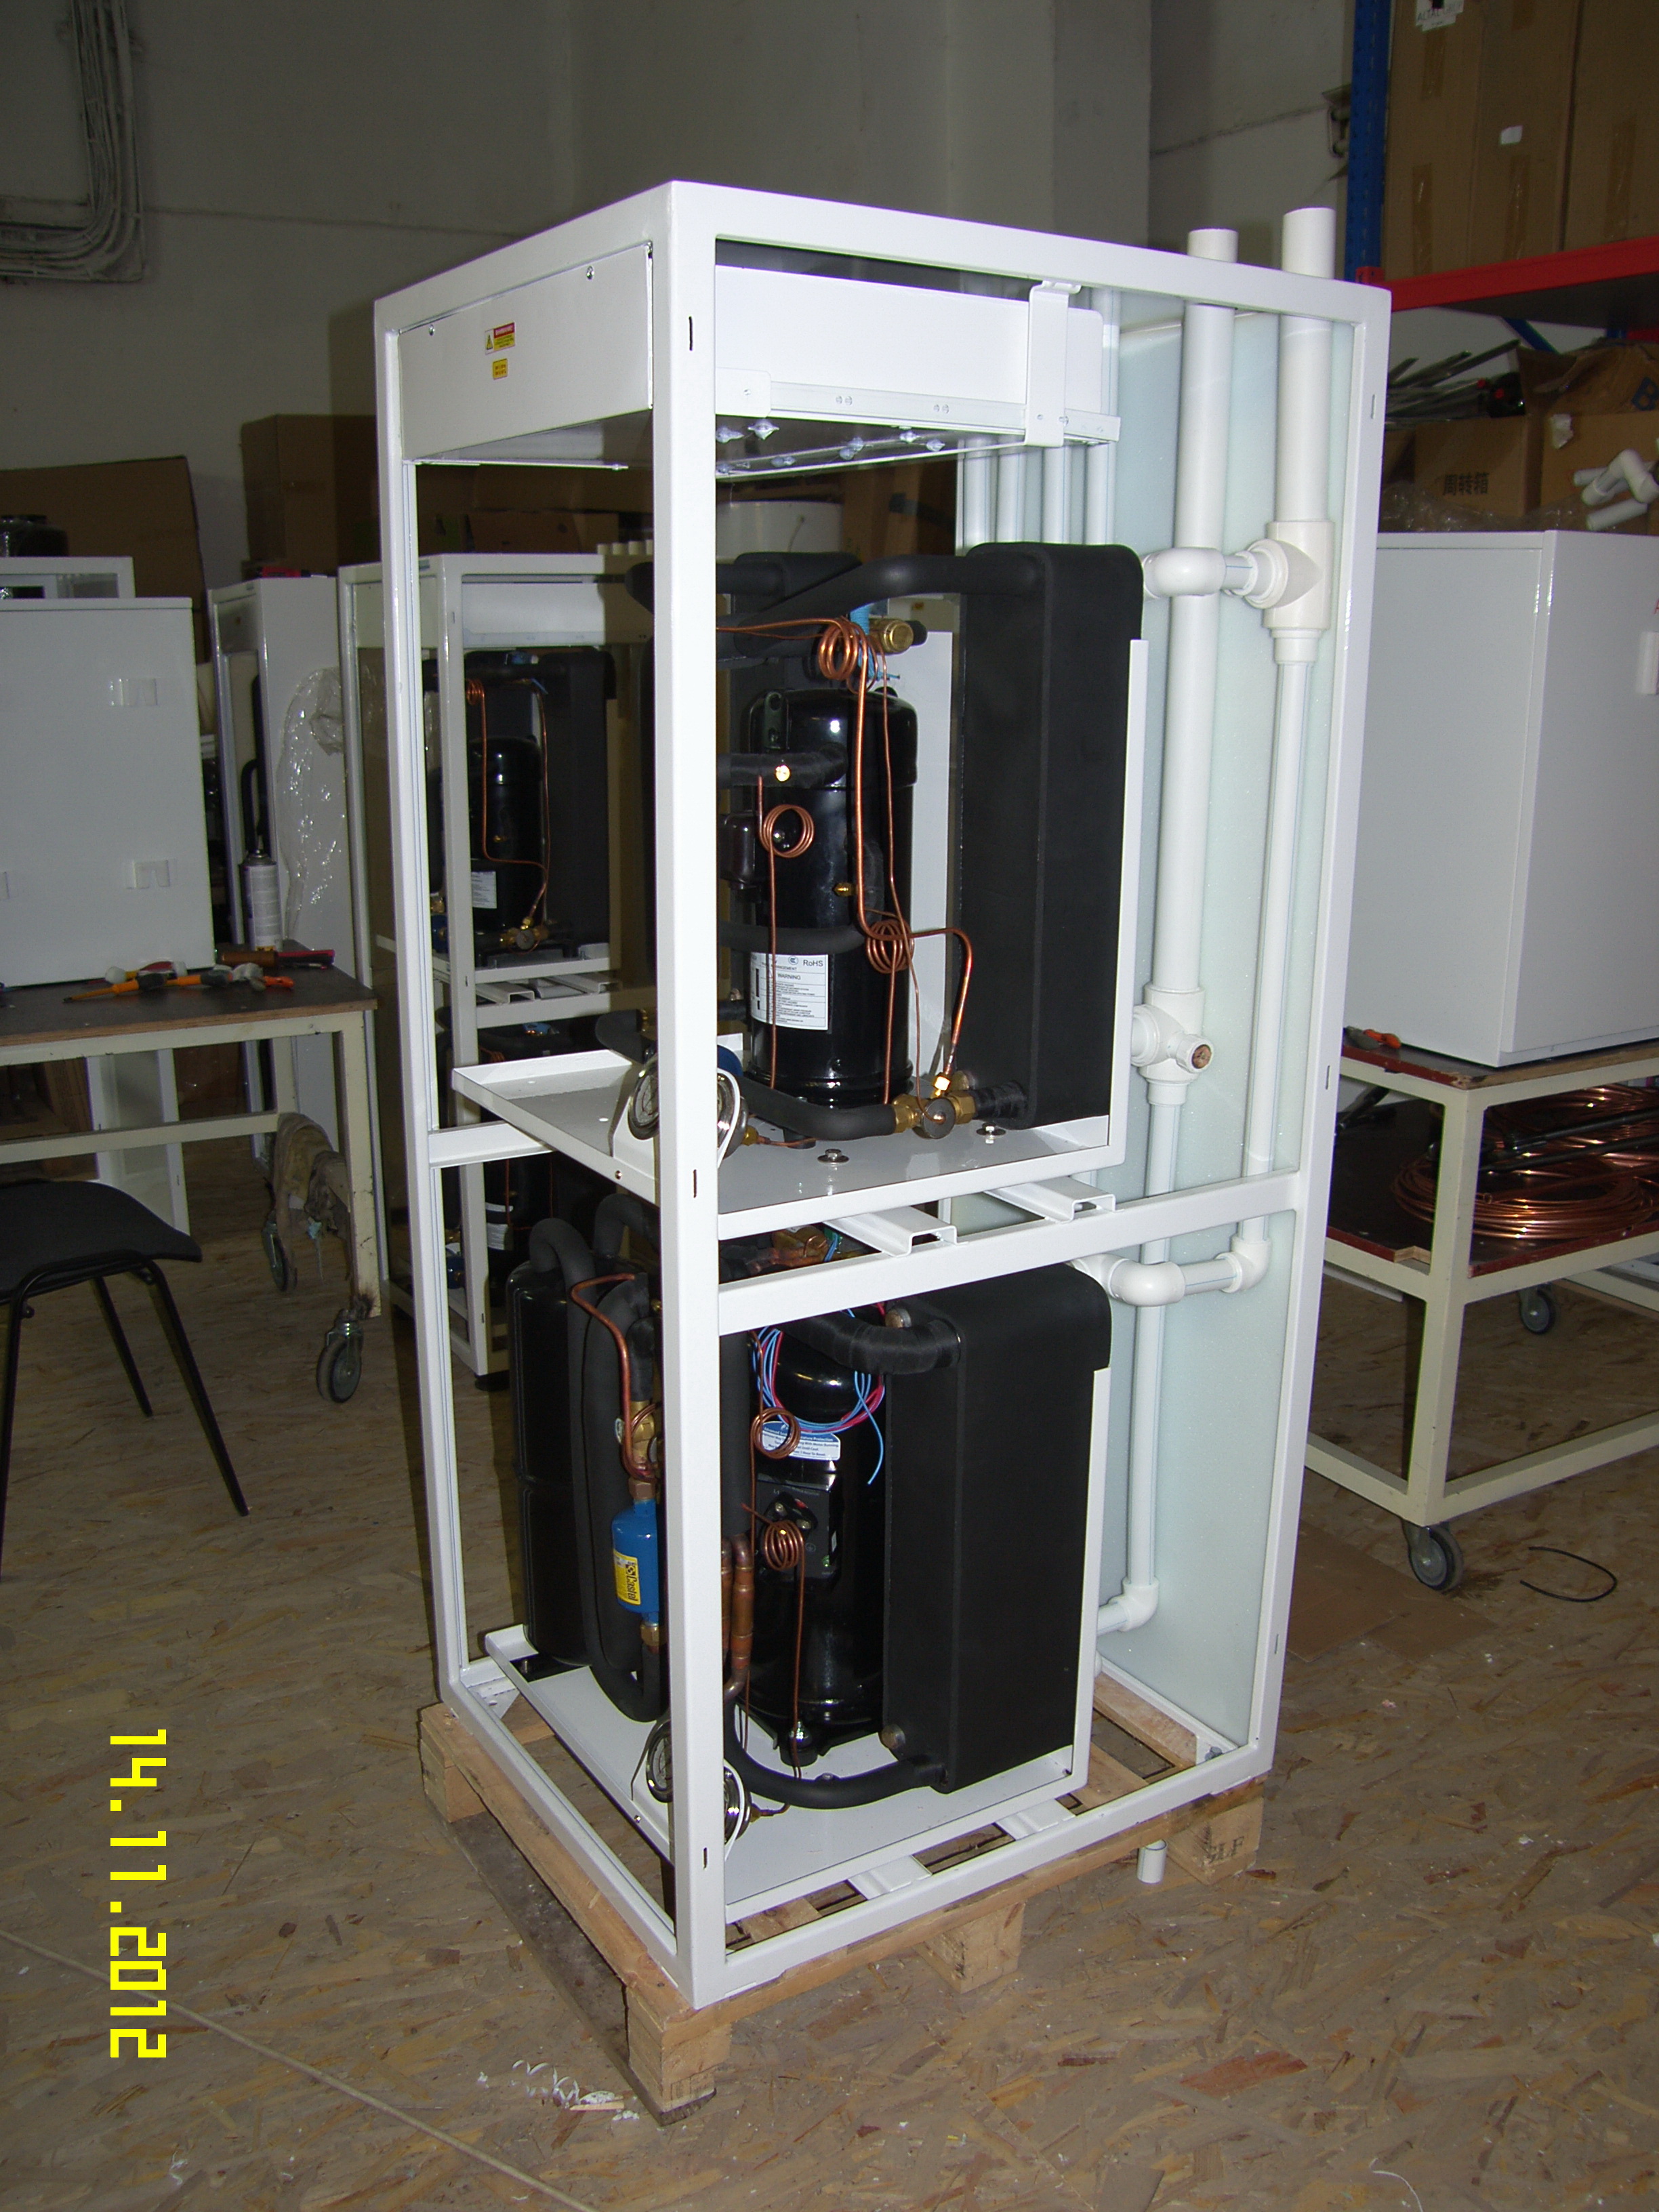 7 kW DC Inverter heat pump, split